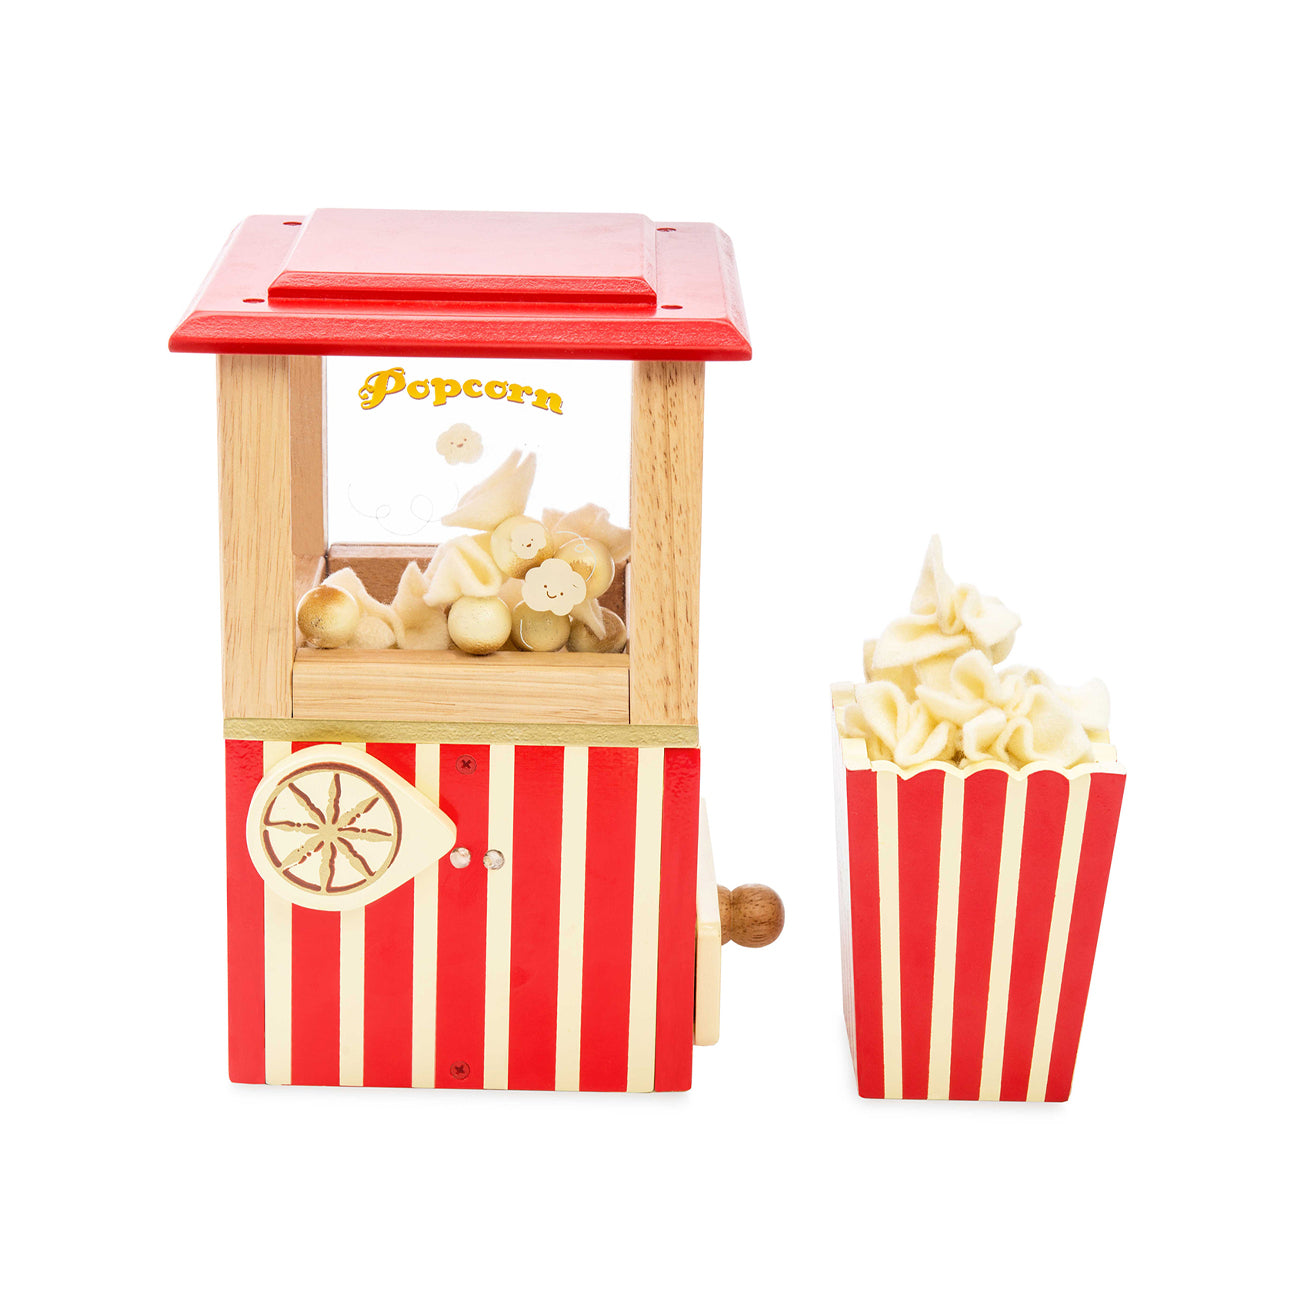 Masina de facut popcorn, din lemn, +3 ani, Le Toy Van